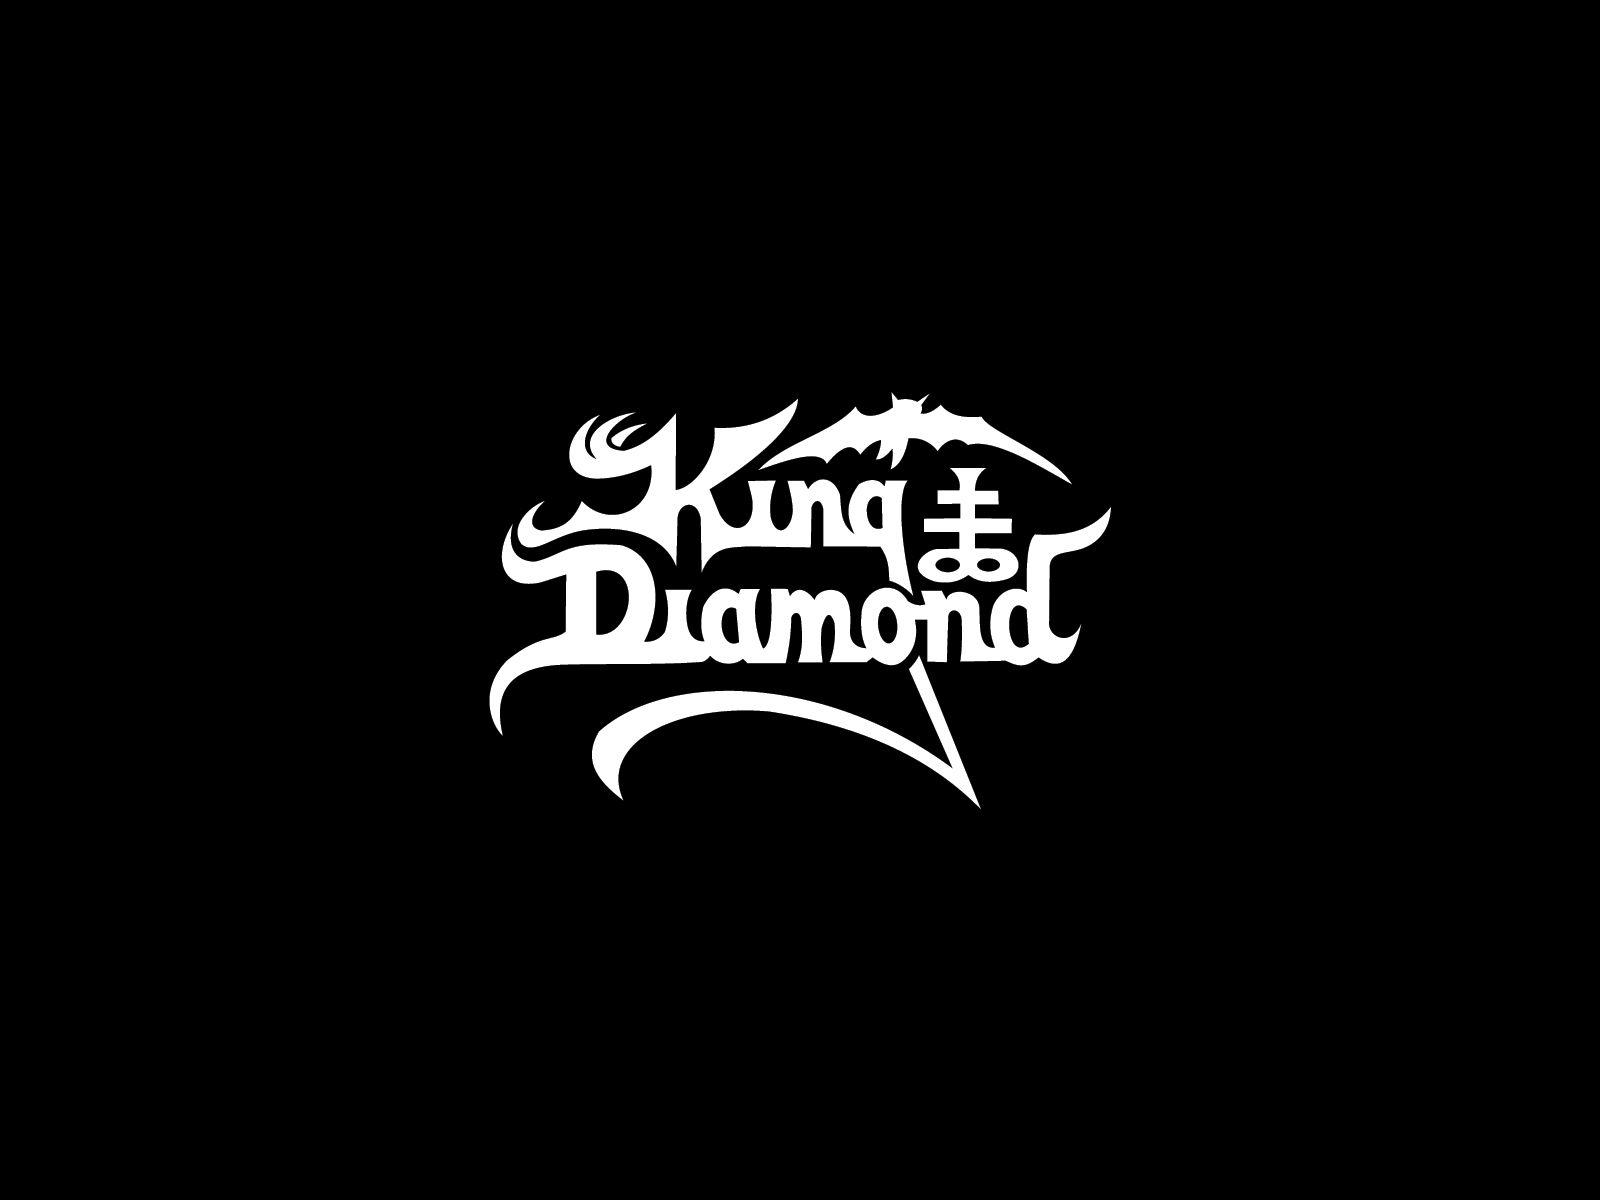 King Diamond Logo - King diamond band logo. Band logos band logos, metal bands